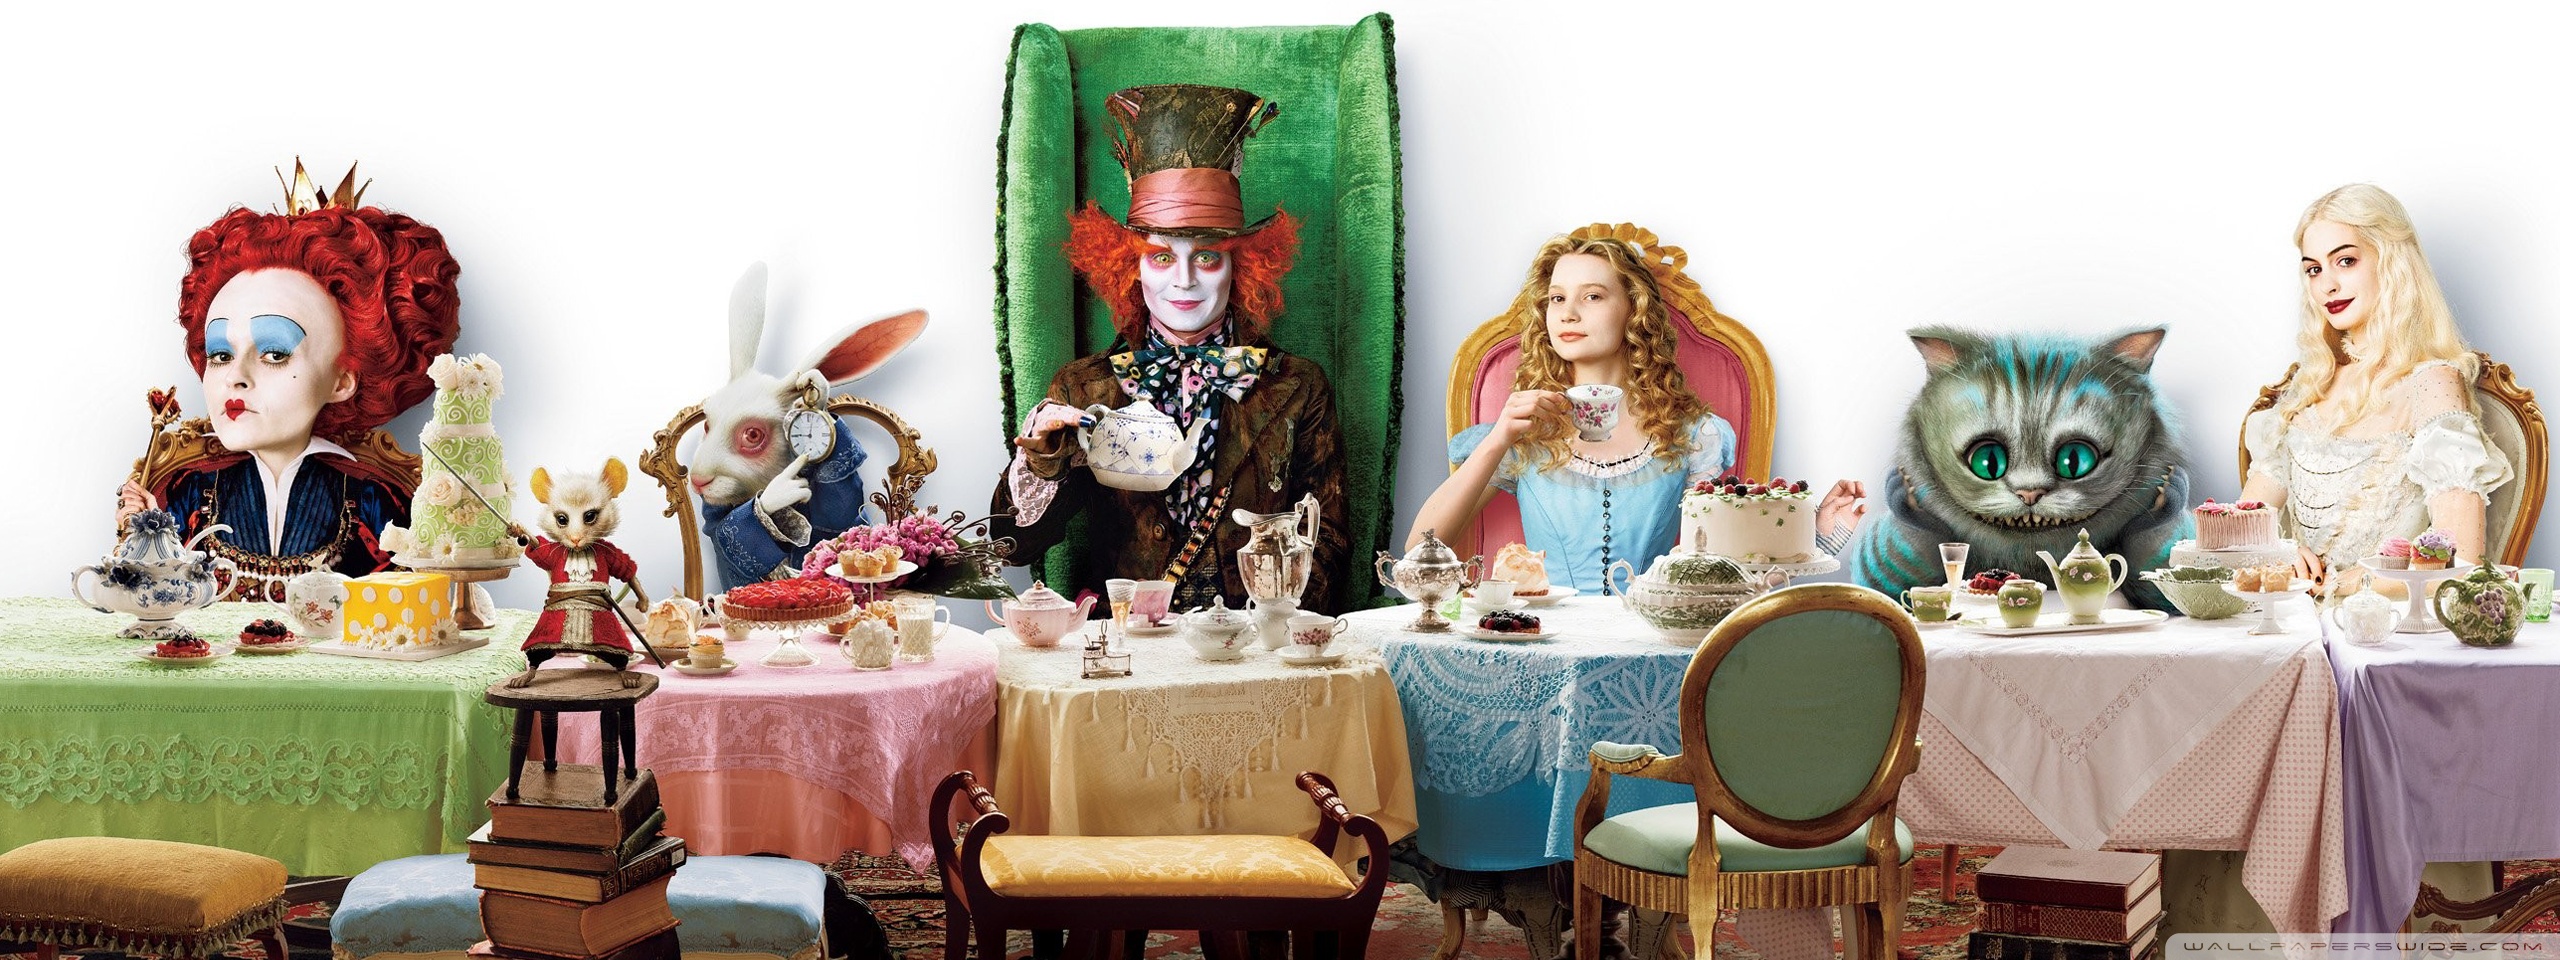 Alice In Wonderland Tim Burton Wallpaper Hd - HD Wallpaper 